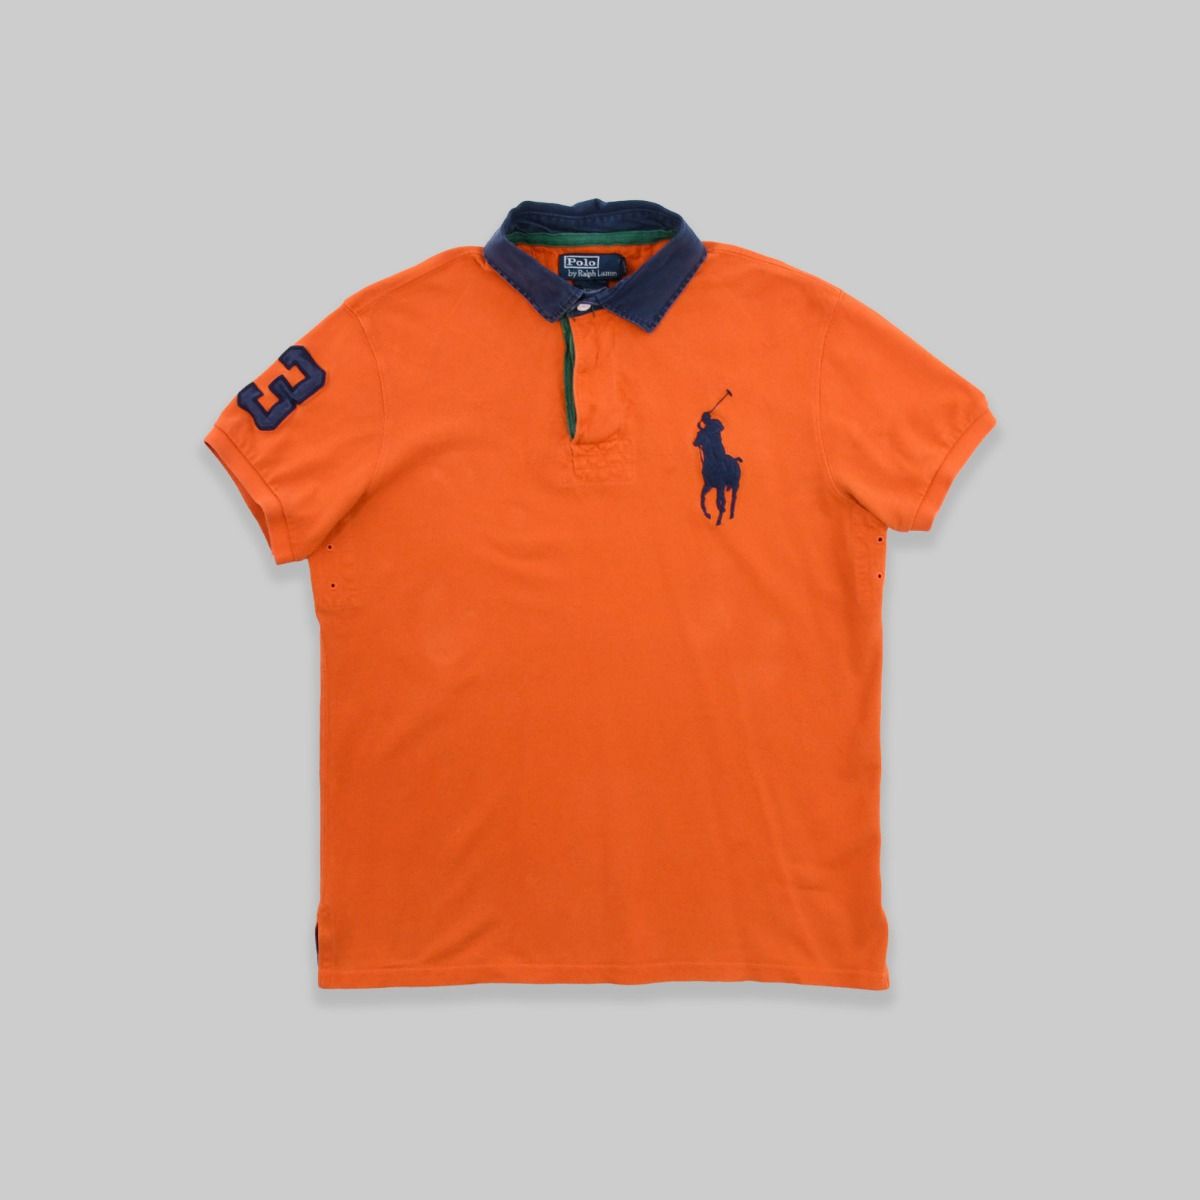 Ralph Lauren Orange Polo Shirt